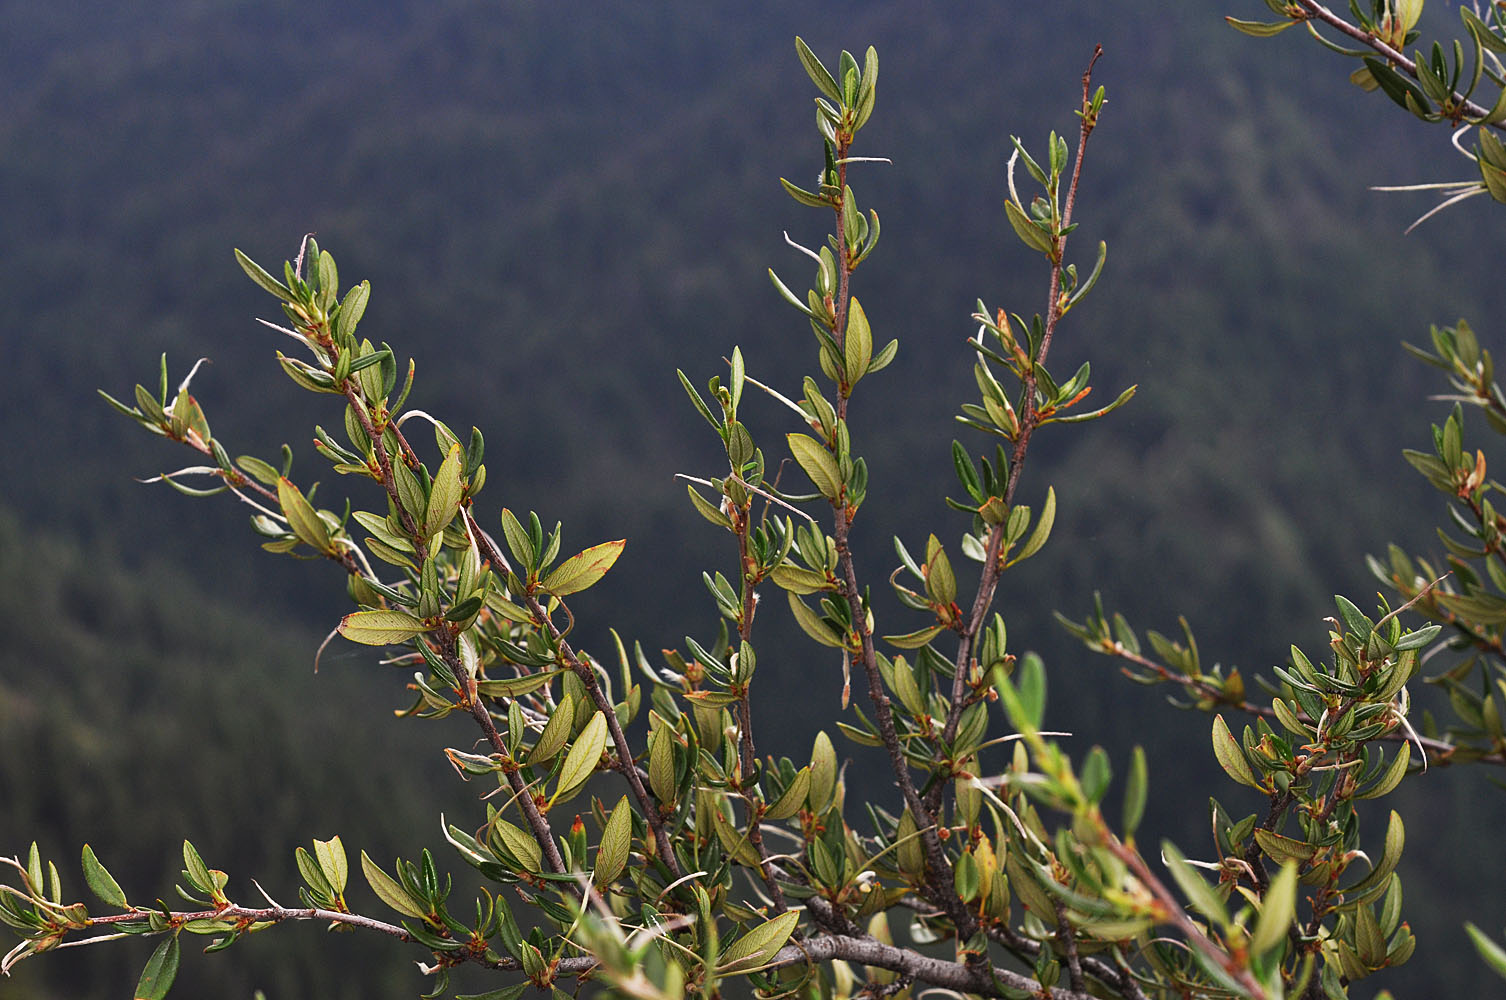 Flora of Eastern Washington Image: Cercocarpus ledifolius